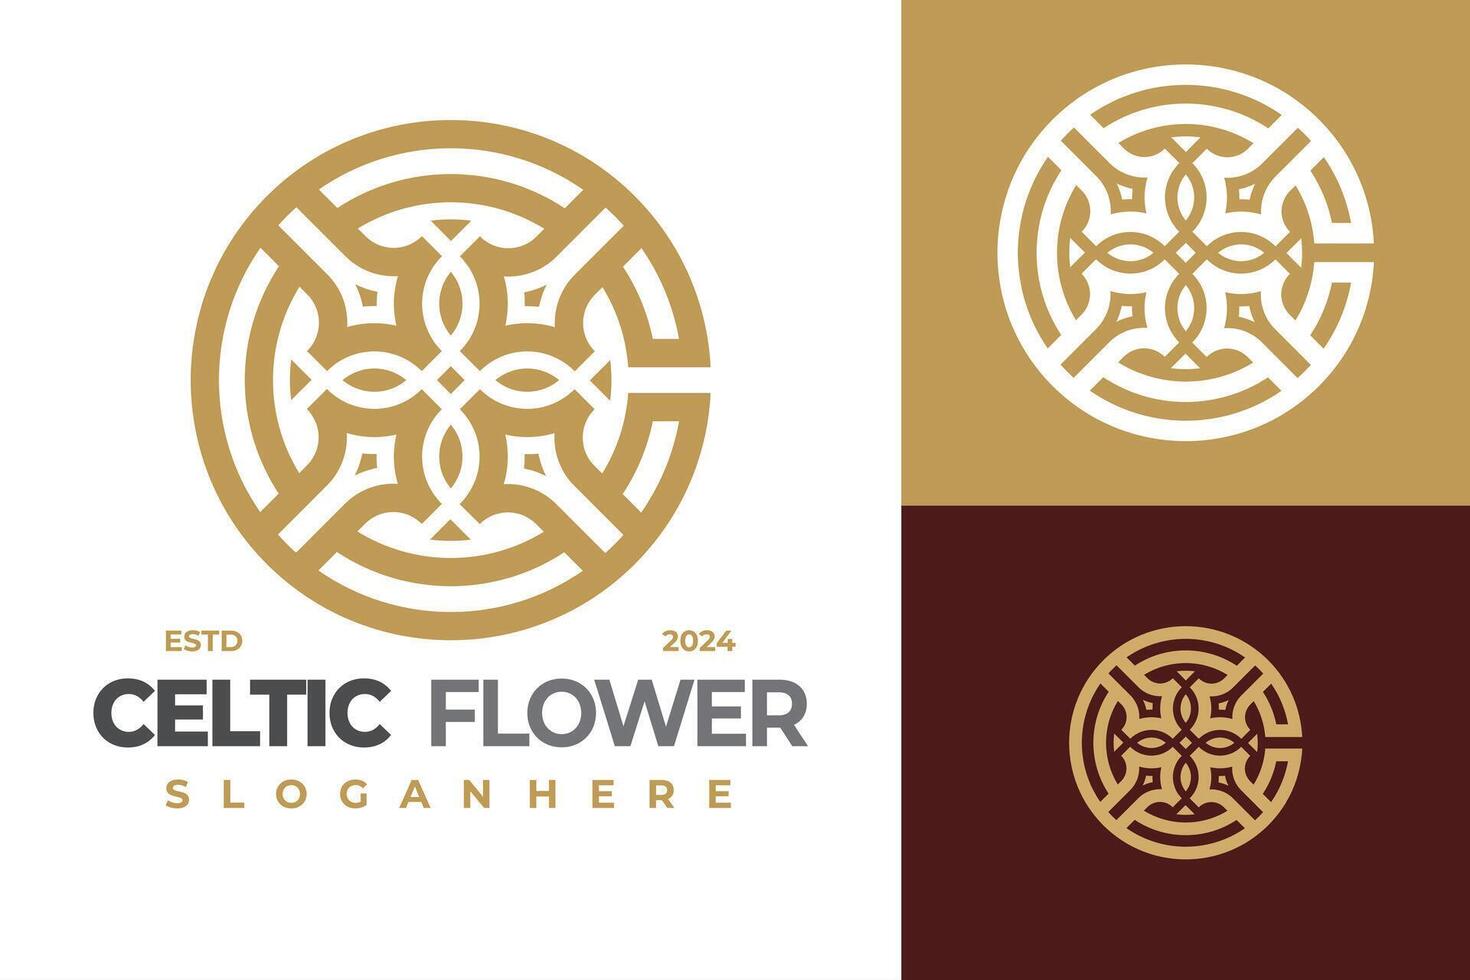 Blume Brief c keltisch Logo Design Symbol Symbol Illustration vektor